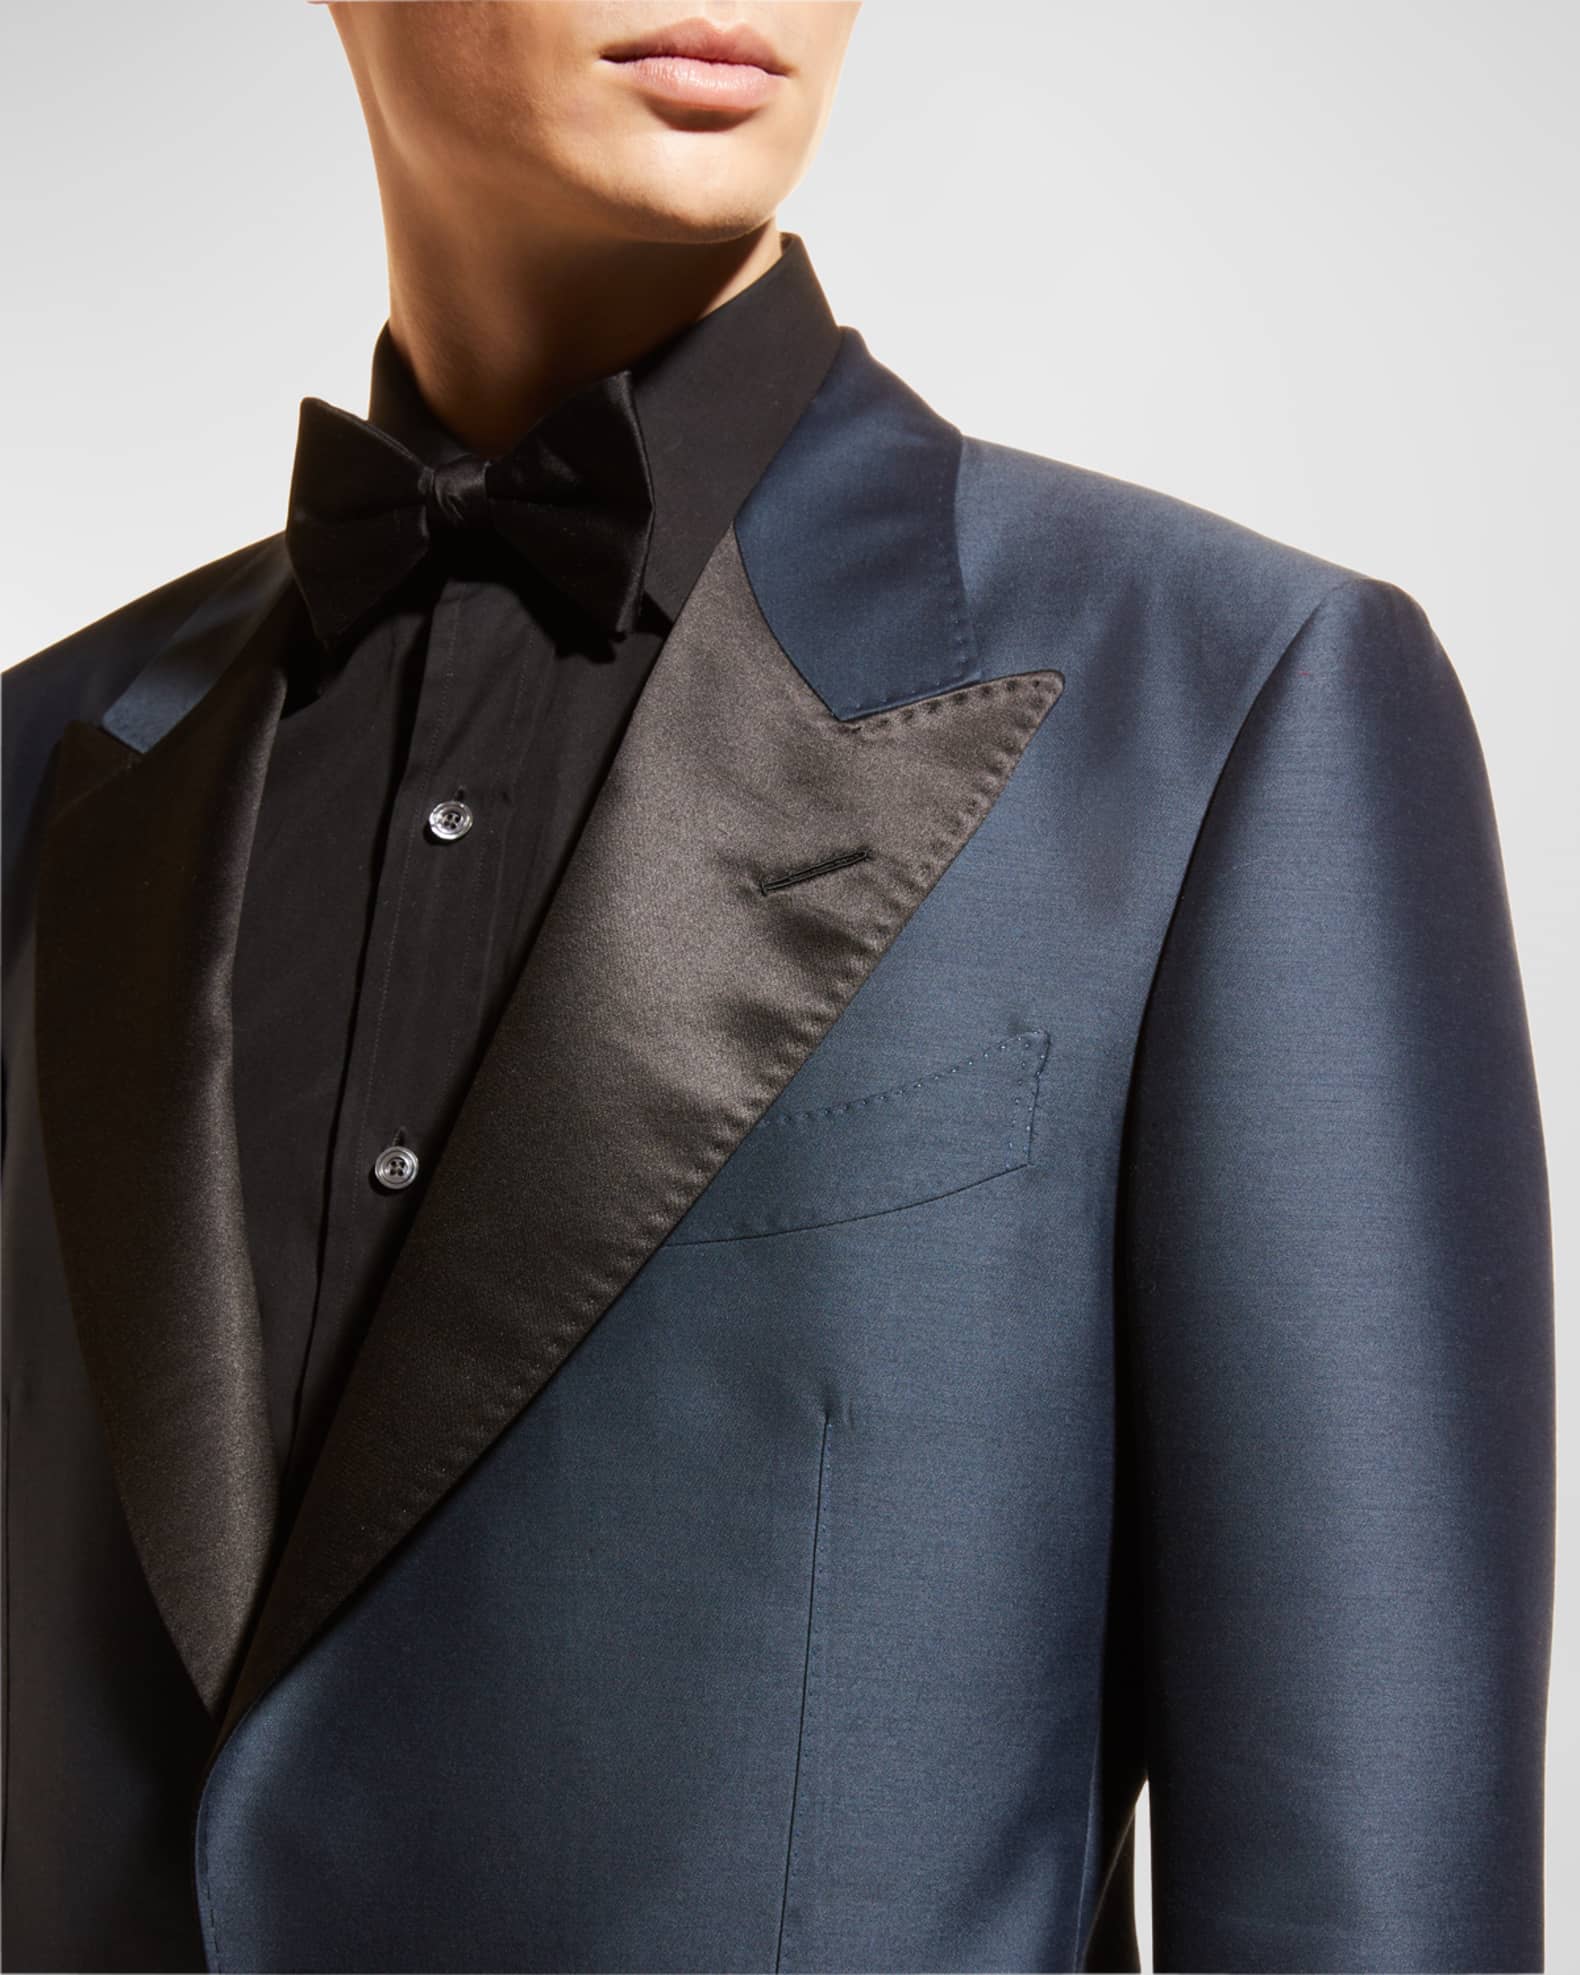 TOM FORD Men's Shelton Tuxedo with Contrast Trim | Neiman Marcus